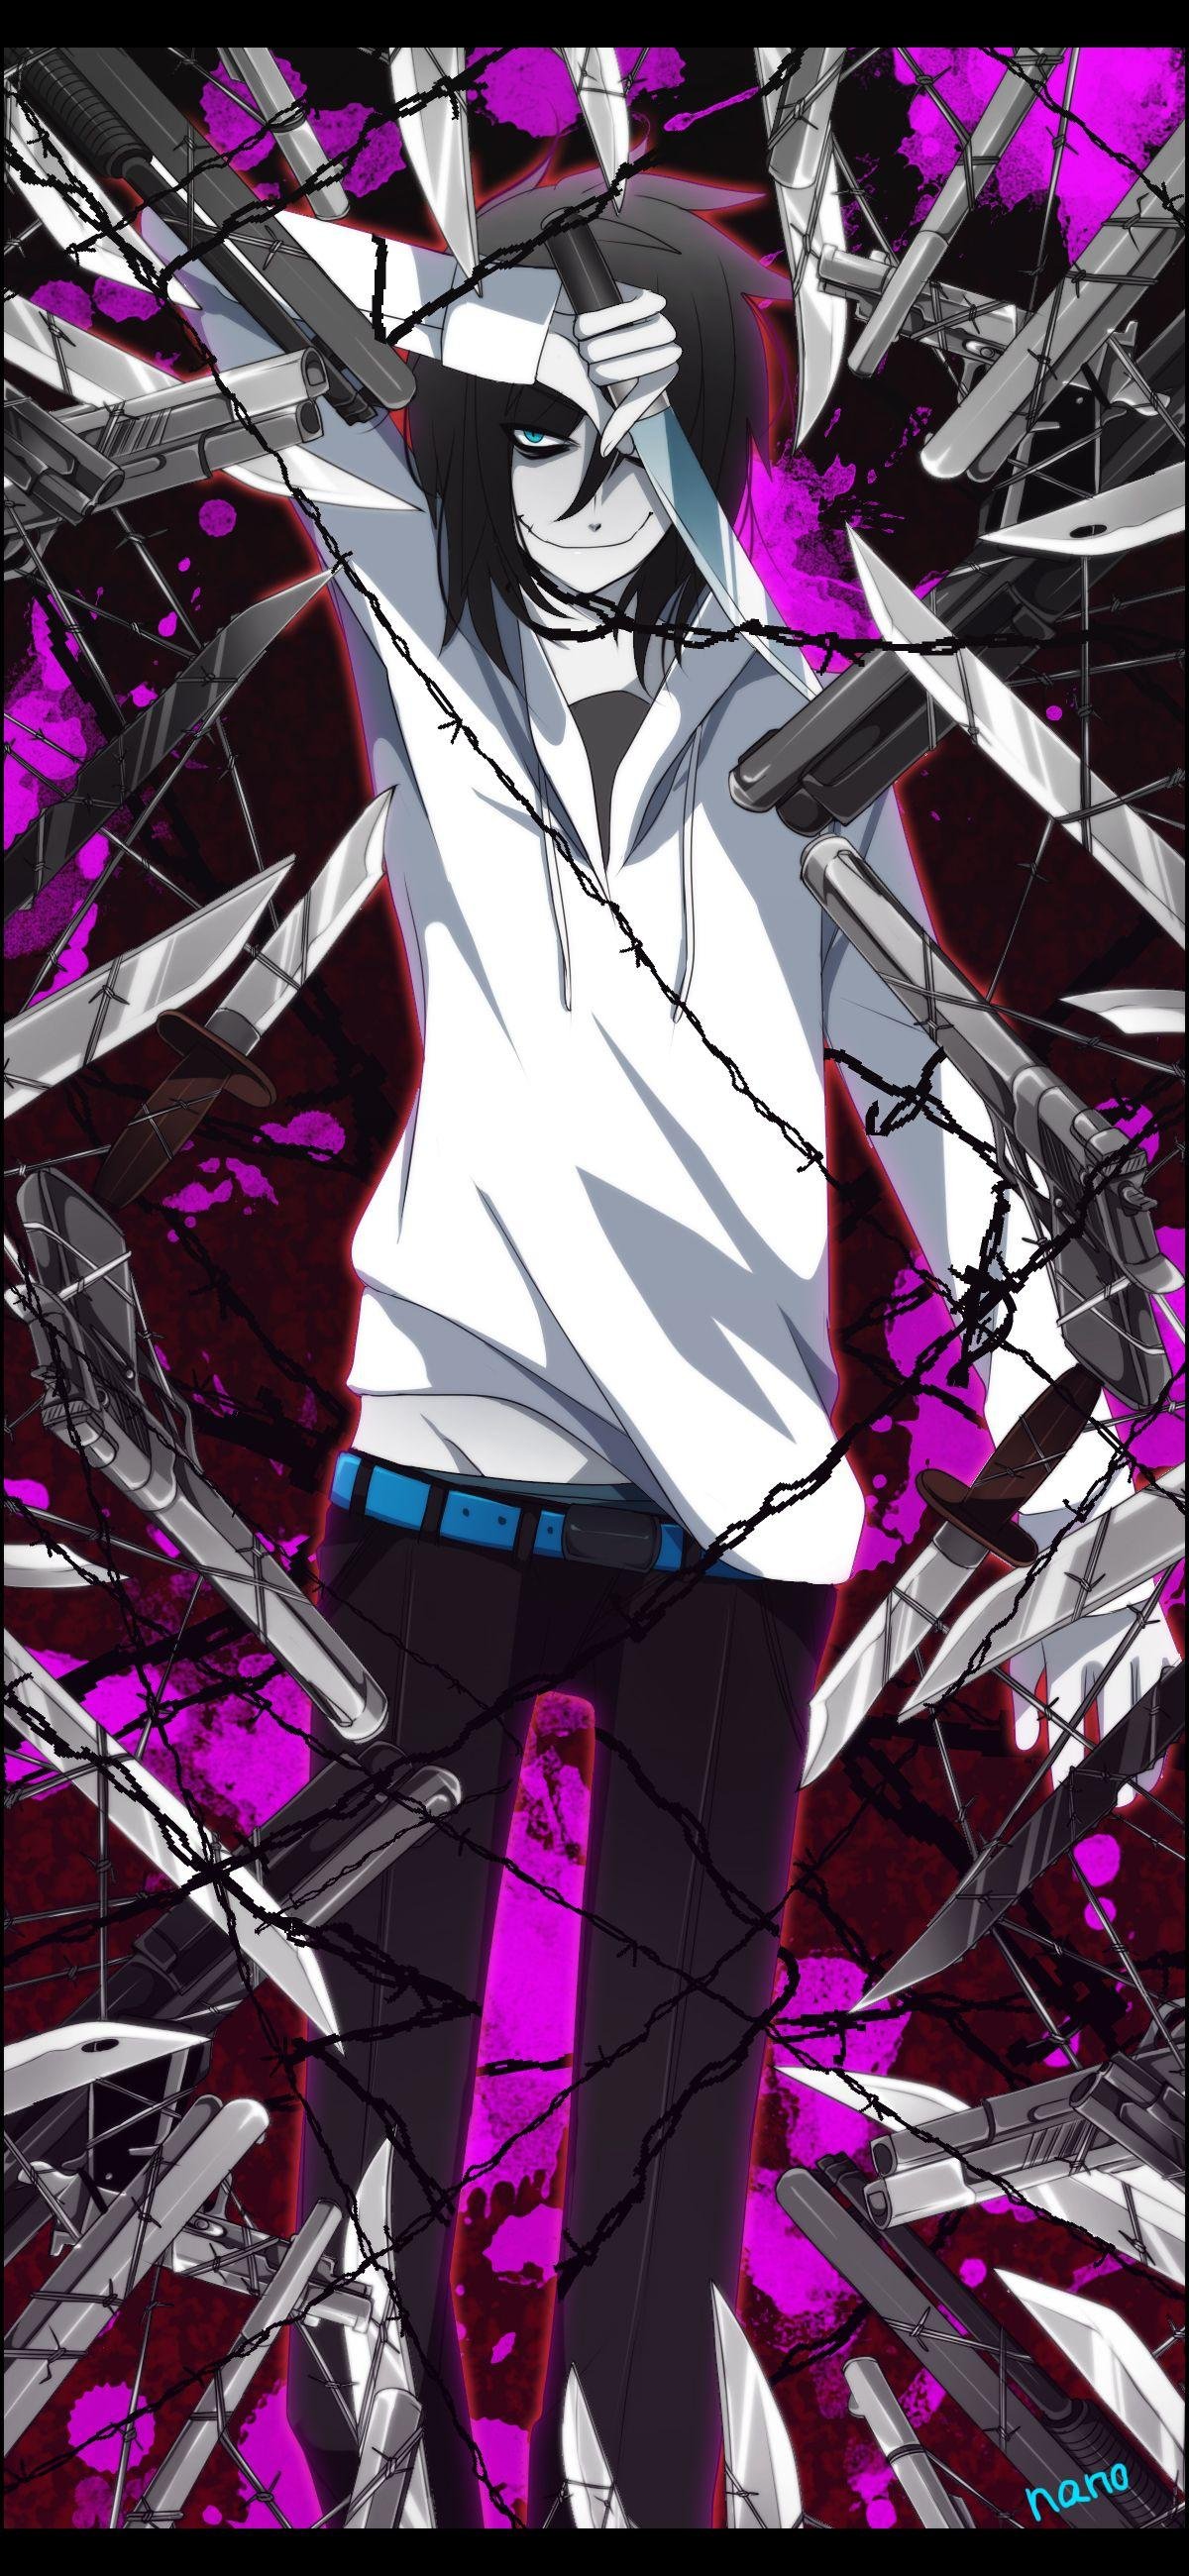 Jeff the killer anime wallpaper, 1748x1240, 835338